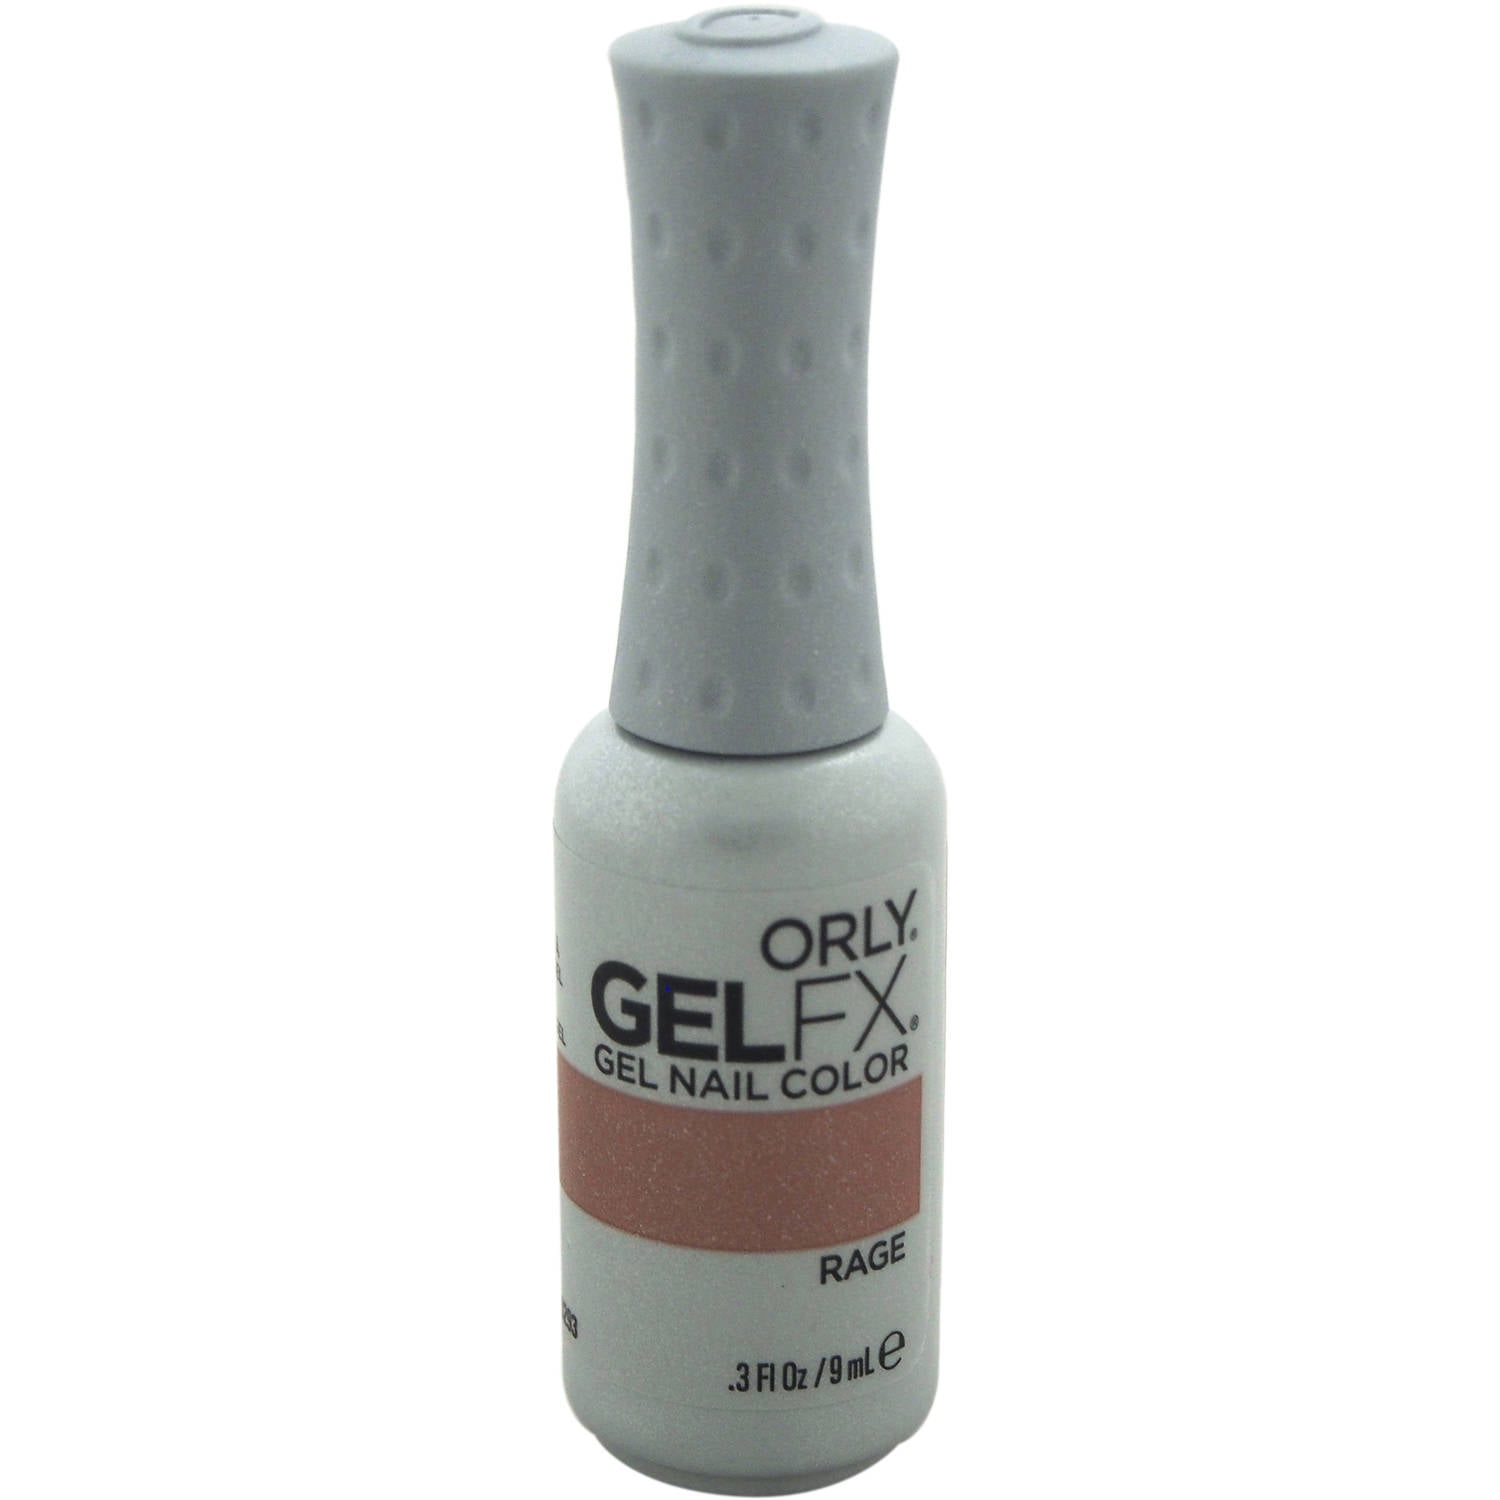 ORLY for Women Gel Fx Gel Nail Color, #30293 Rage, 0.3 oz - Walmart.com ...